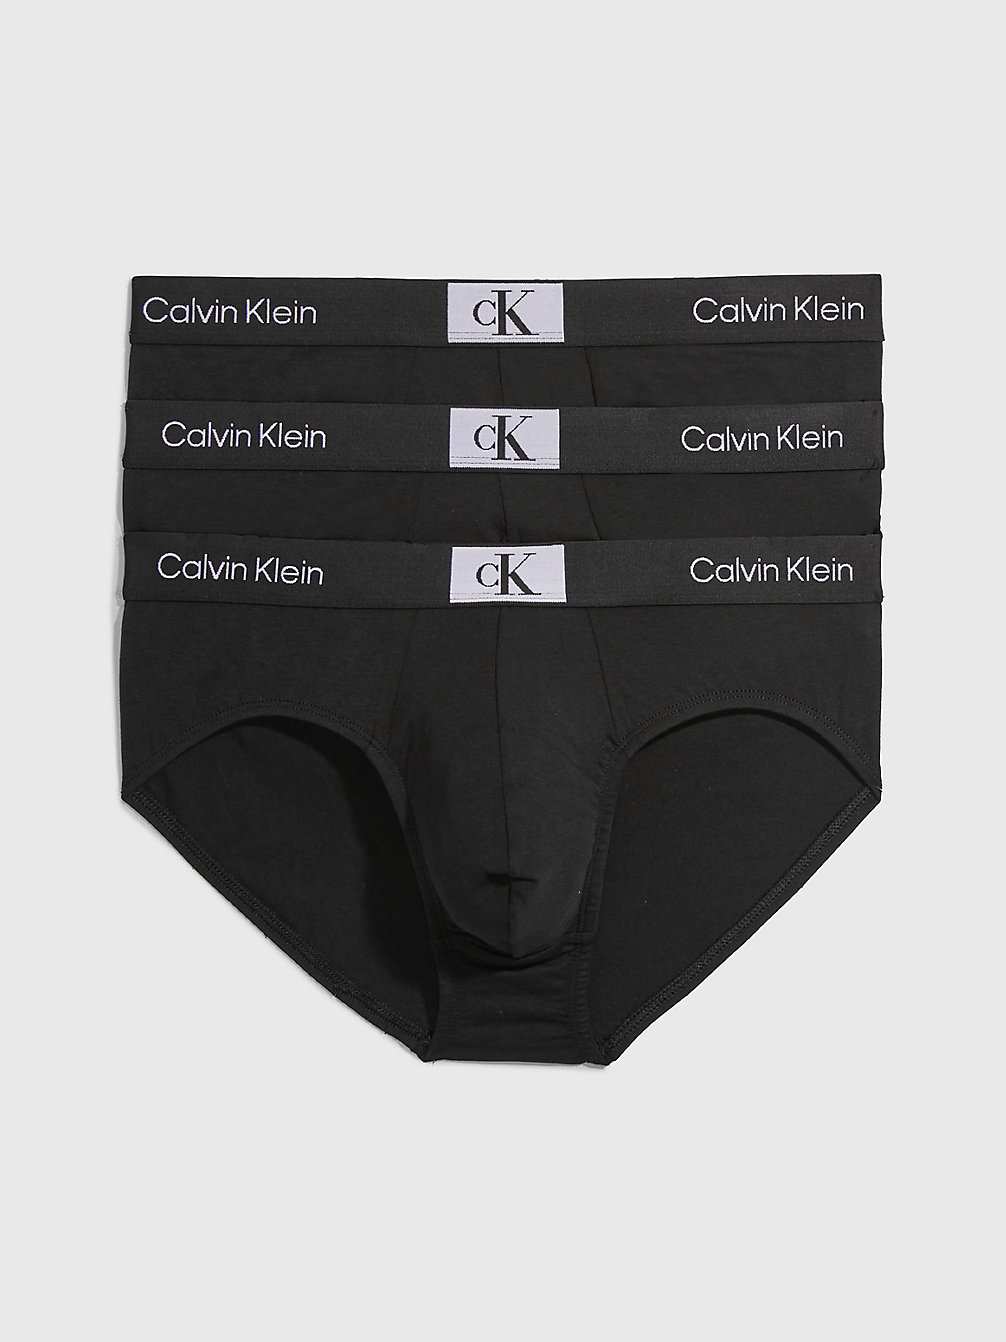 BLACK/ BLACK / BLACK > Zestaw 3 Par Slipów - Ck96 > undefined Mężczyźni - Calvin Klein